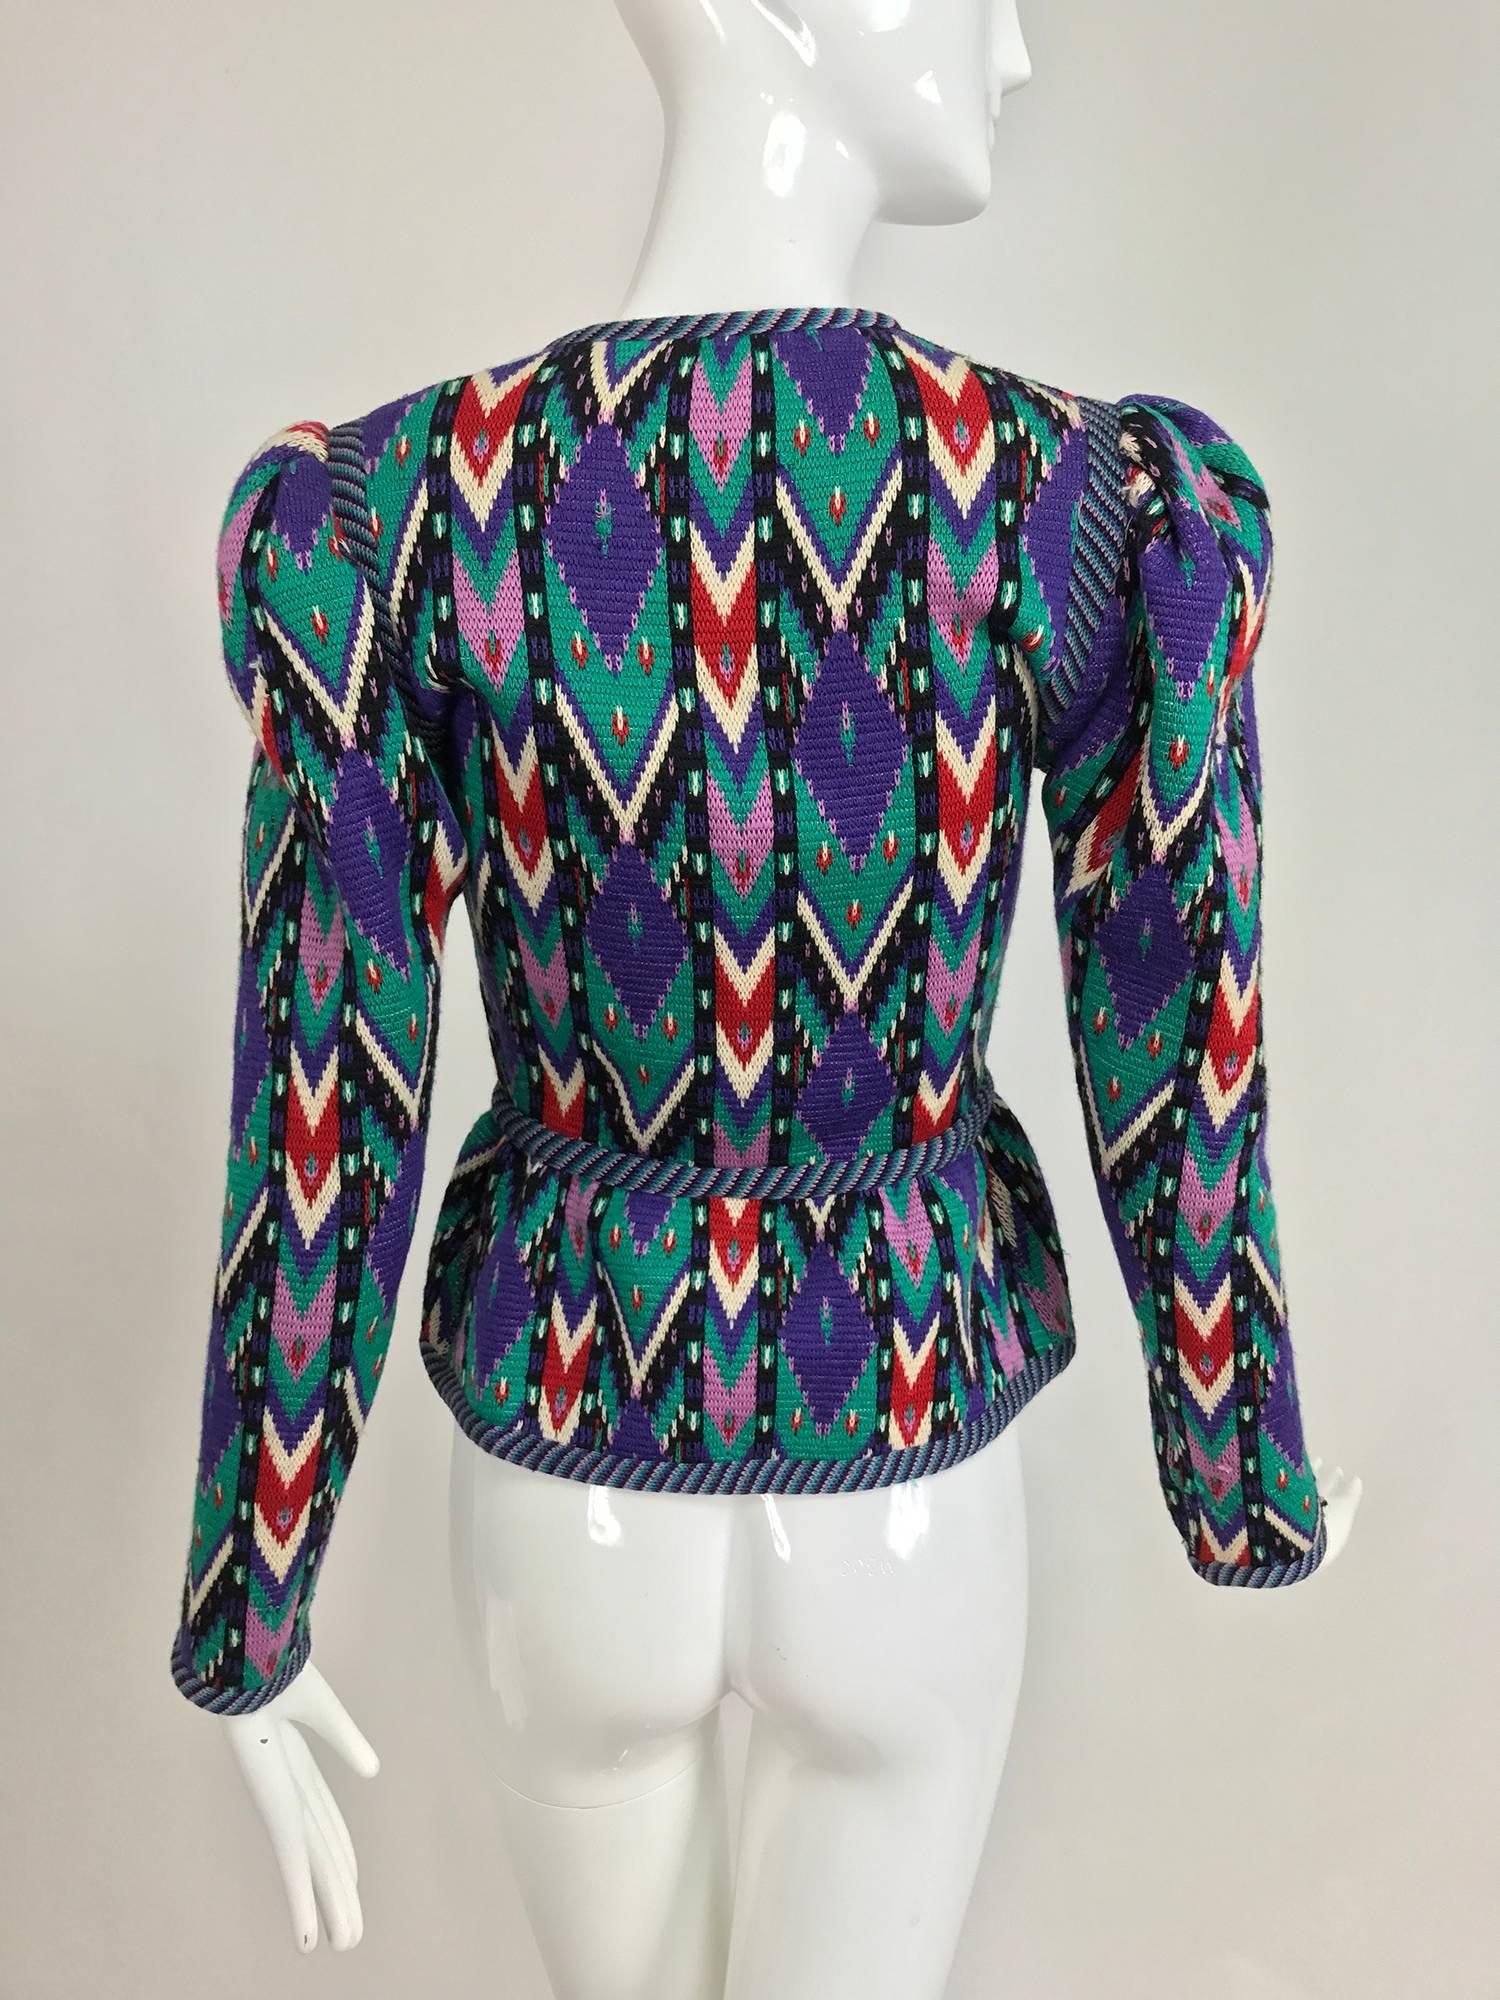 Yves Saint Laurent colourful geometric cardigan sweater 1970s 1